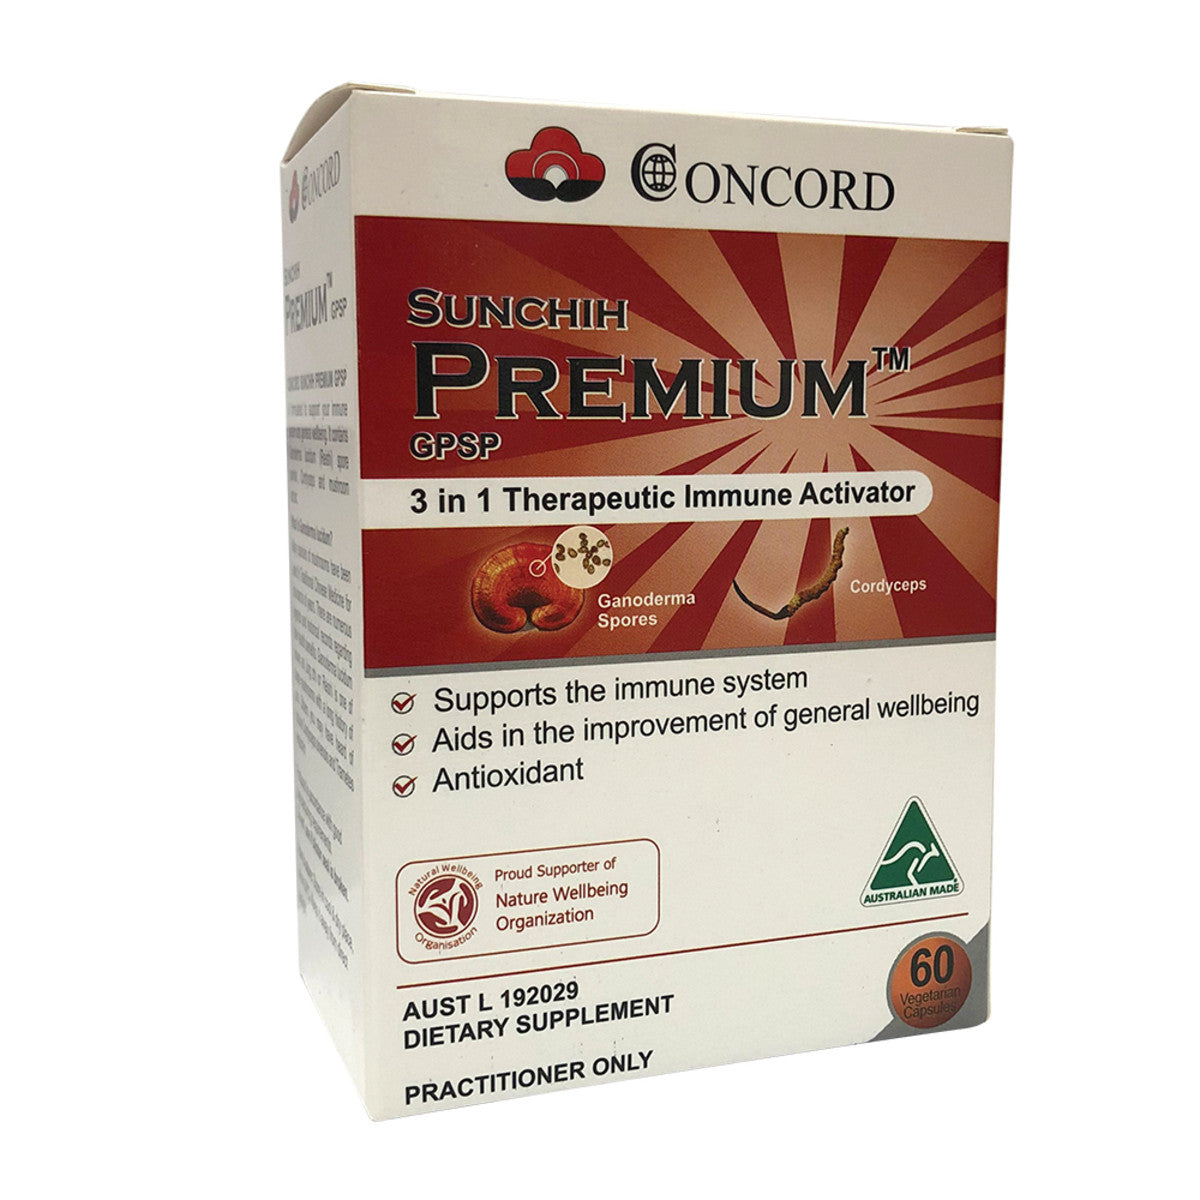 Concord - Sunchih Premium GPSP